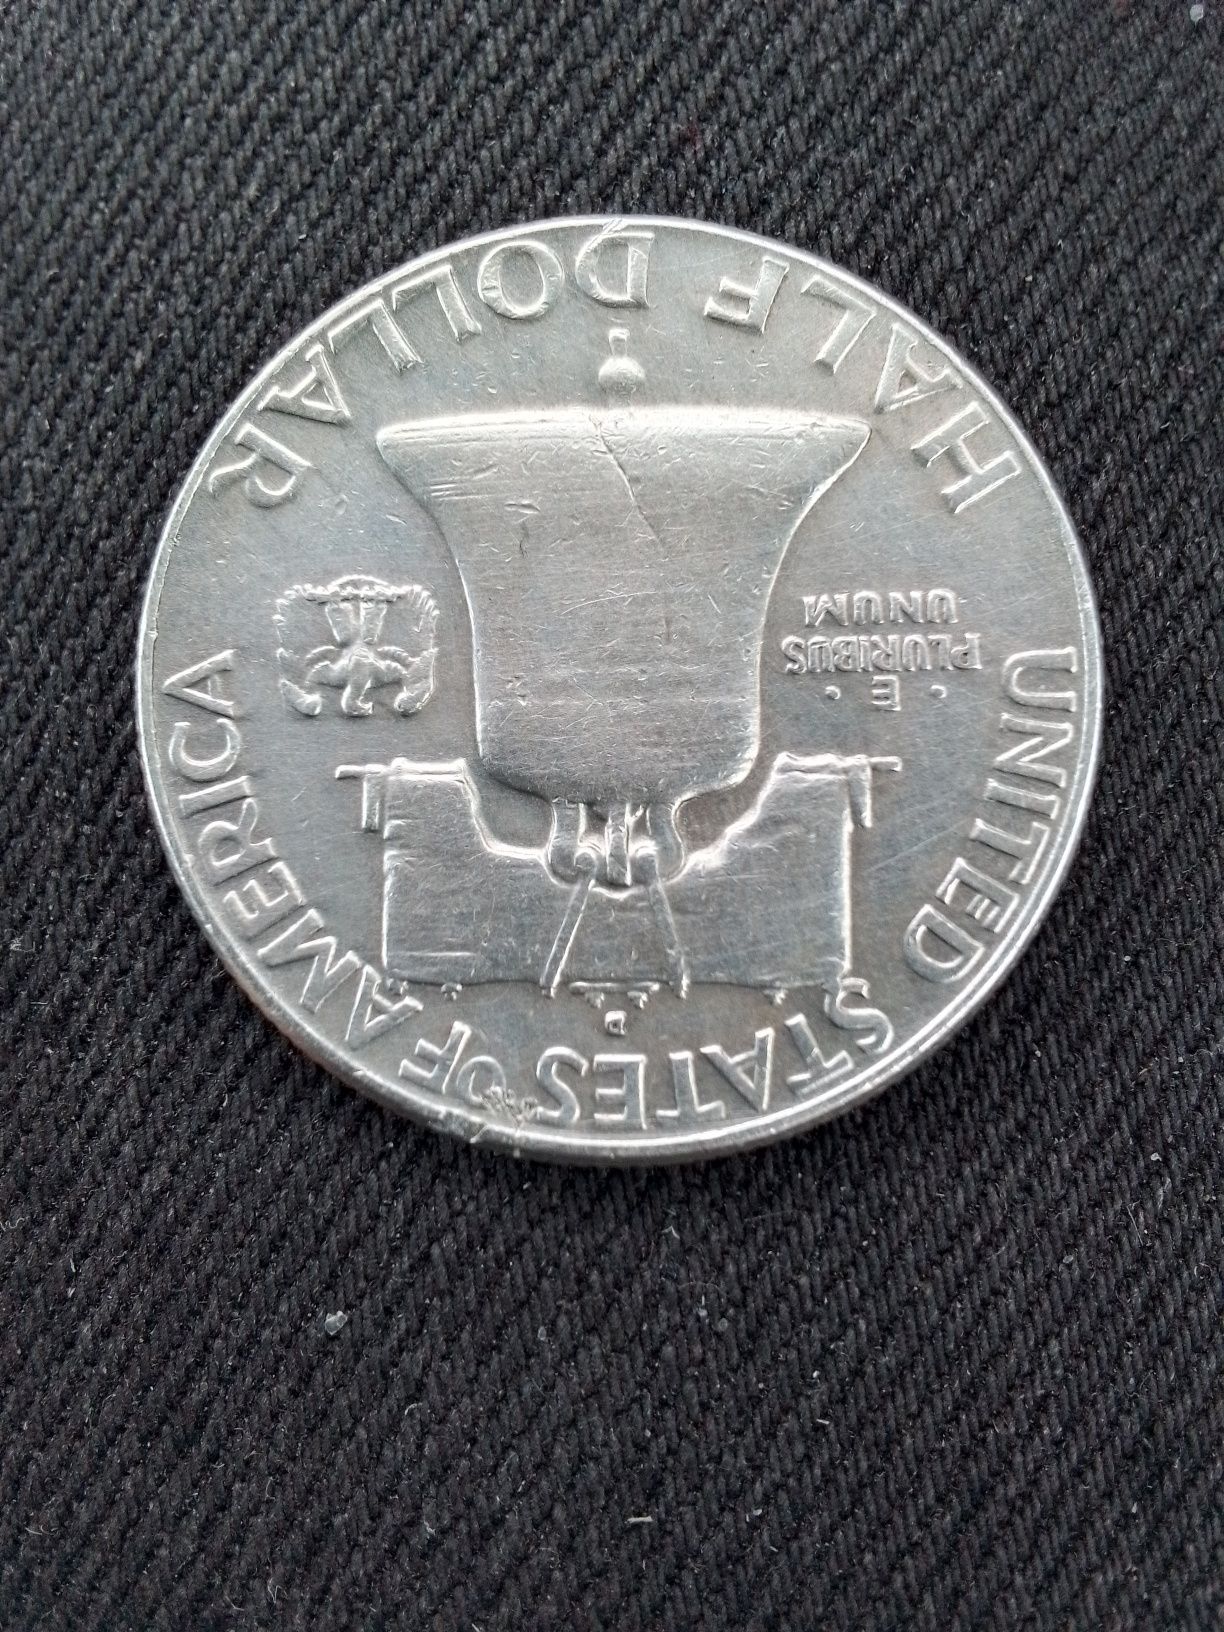 LIBERTY 1962 monetą USA srebro